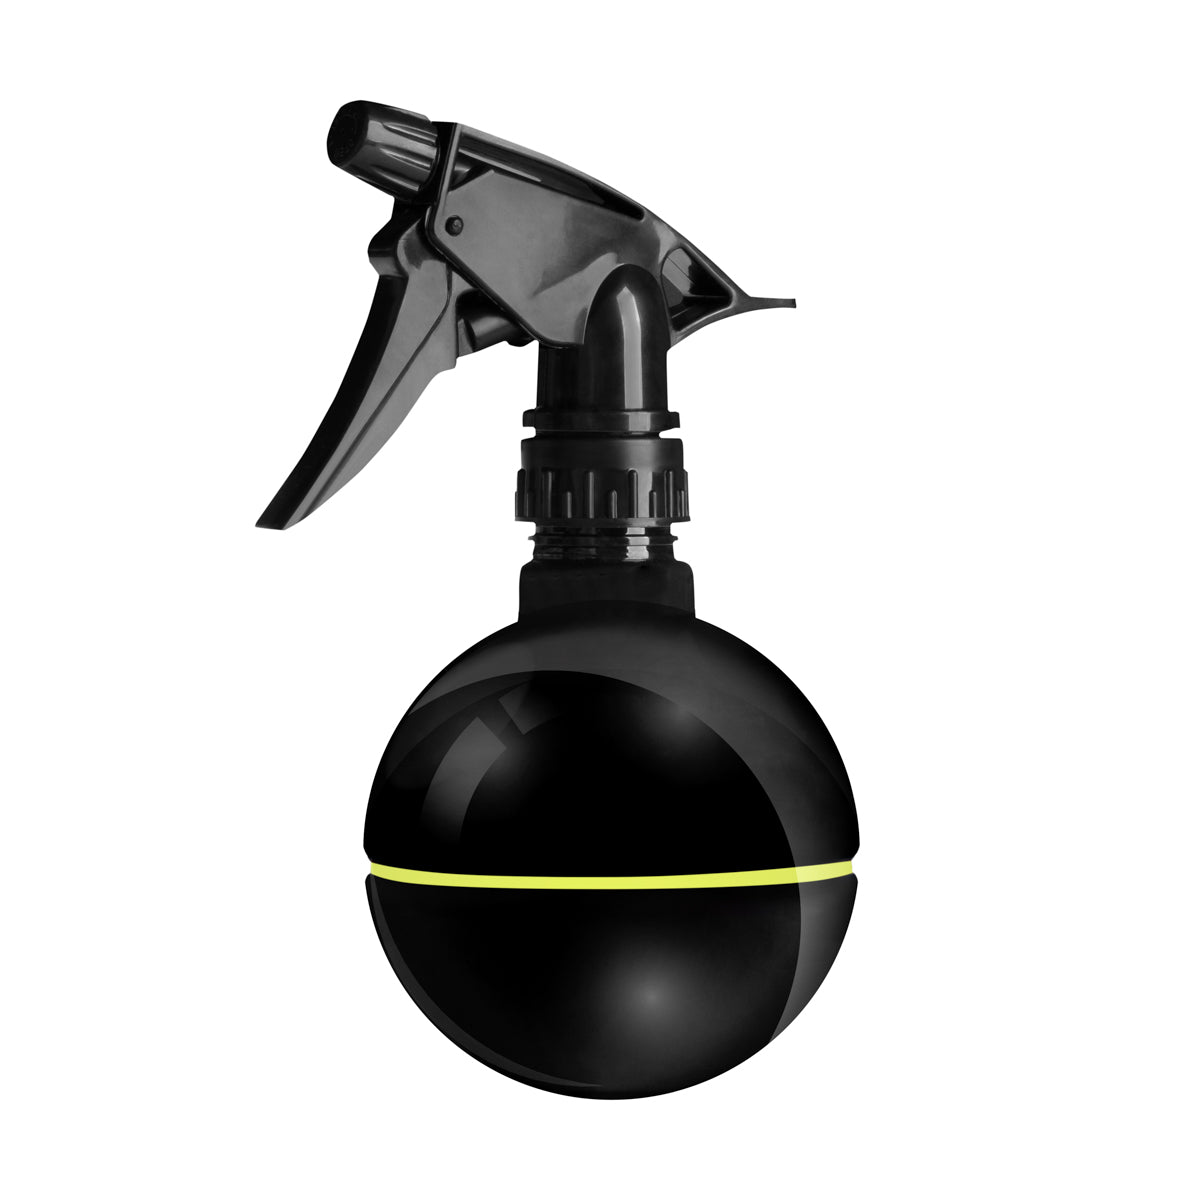 ACTIVESHOP Sprayer for hairdressing ball 200 ml